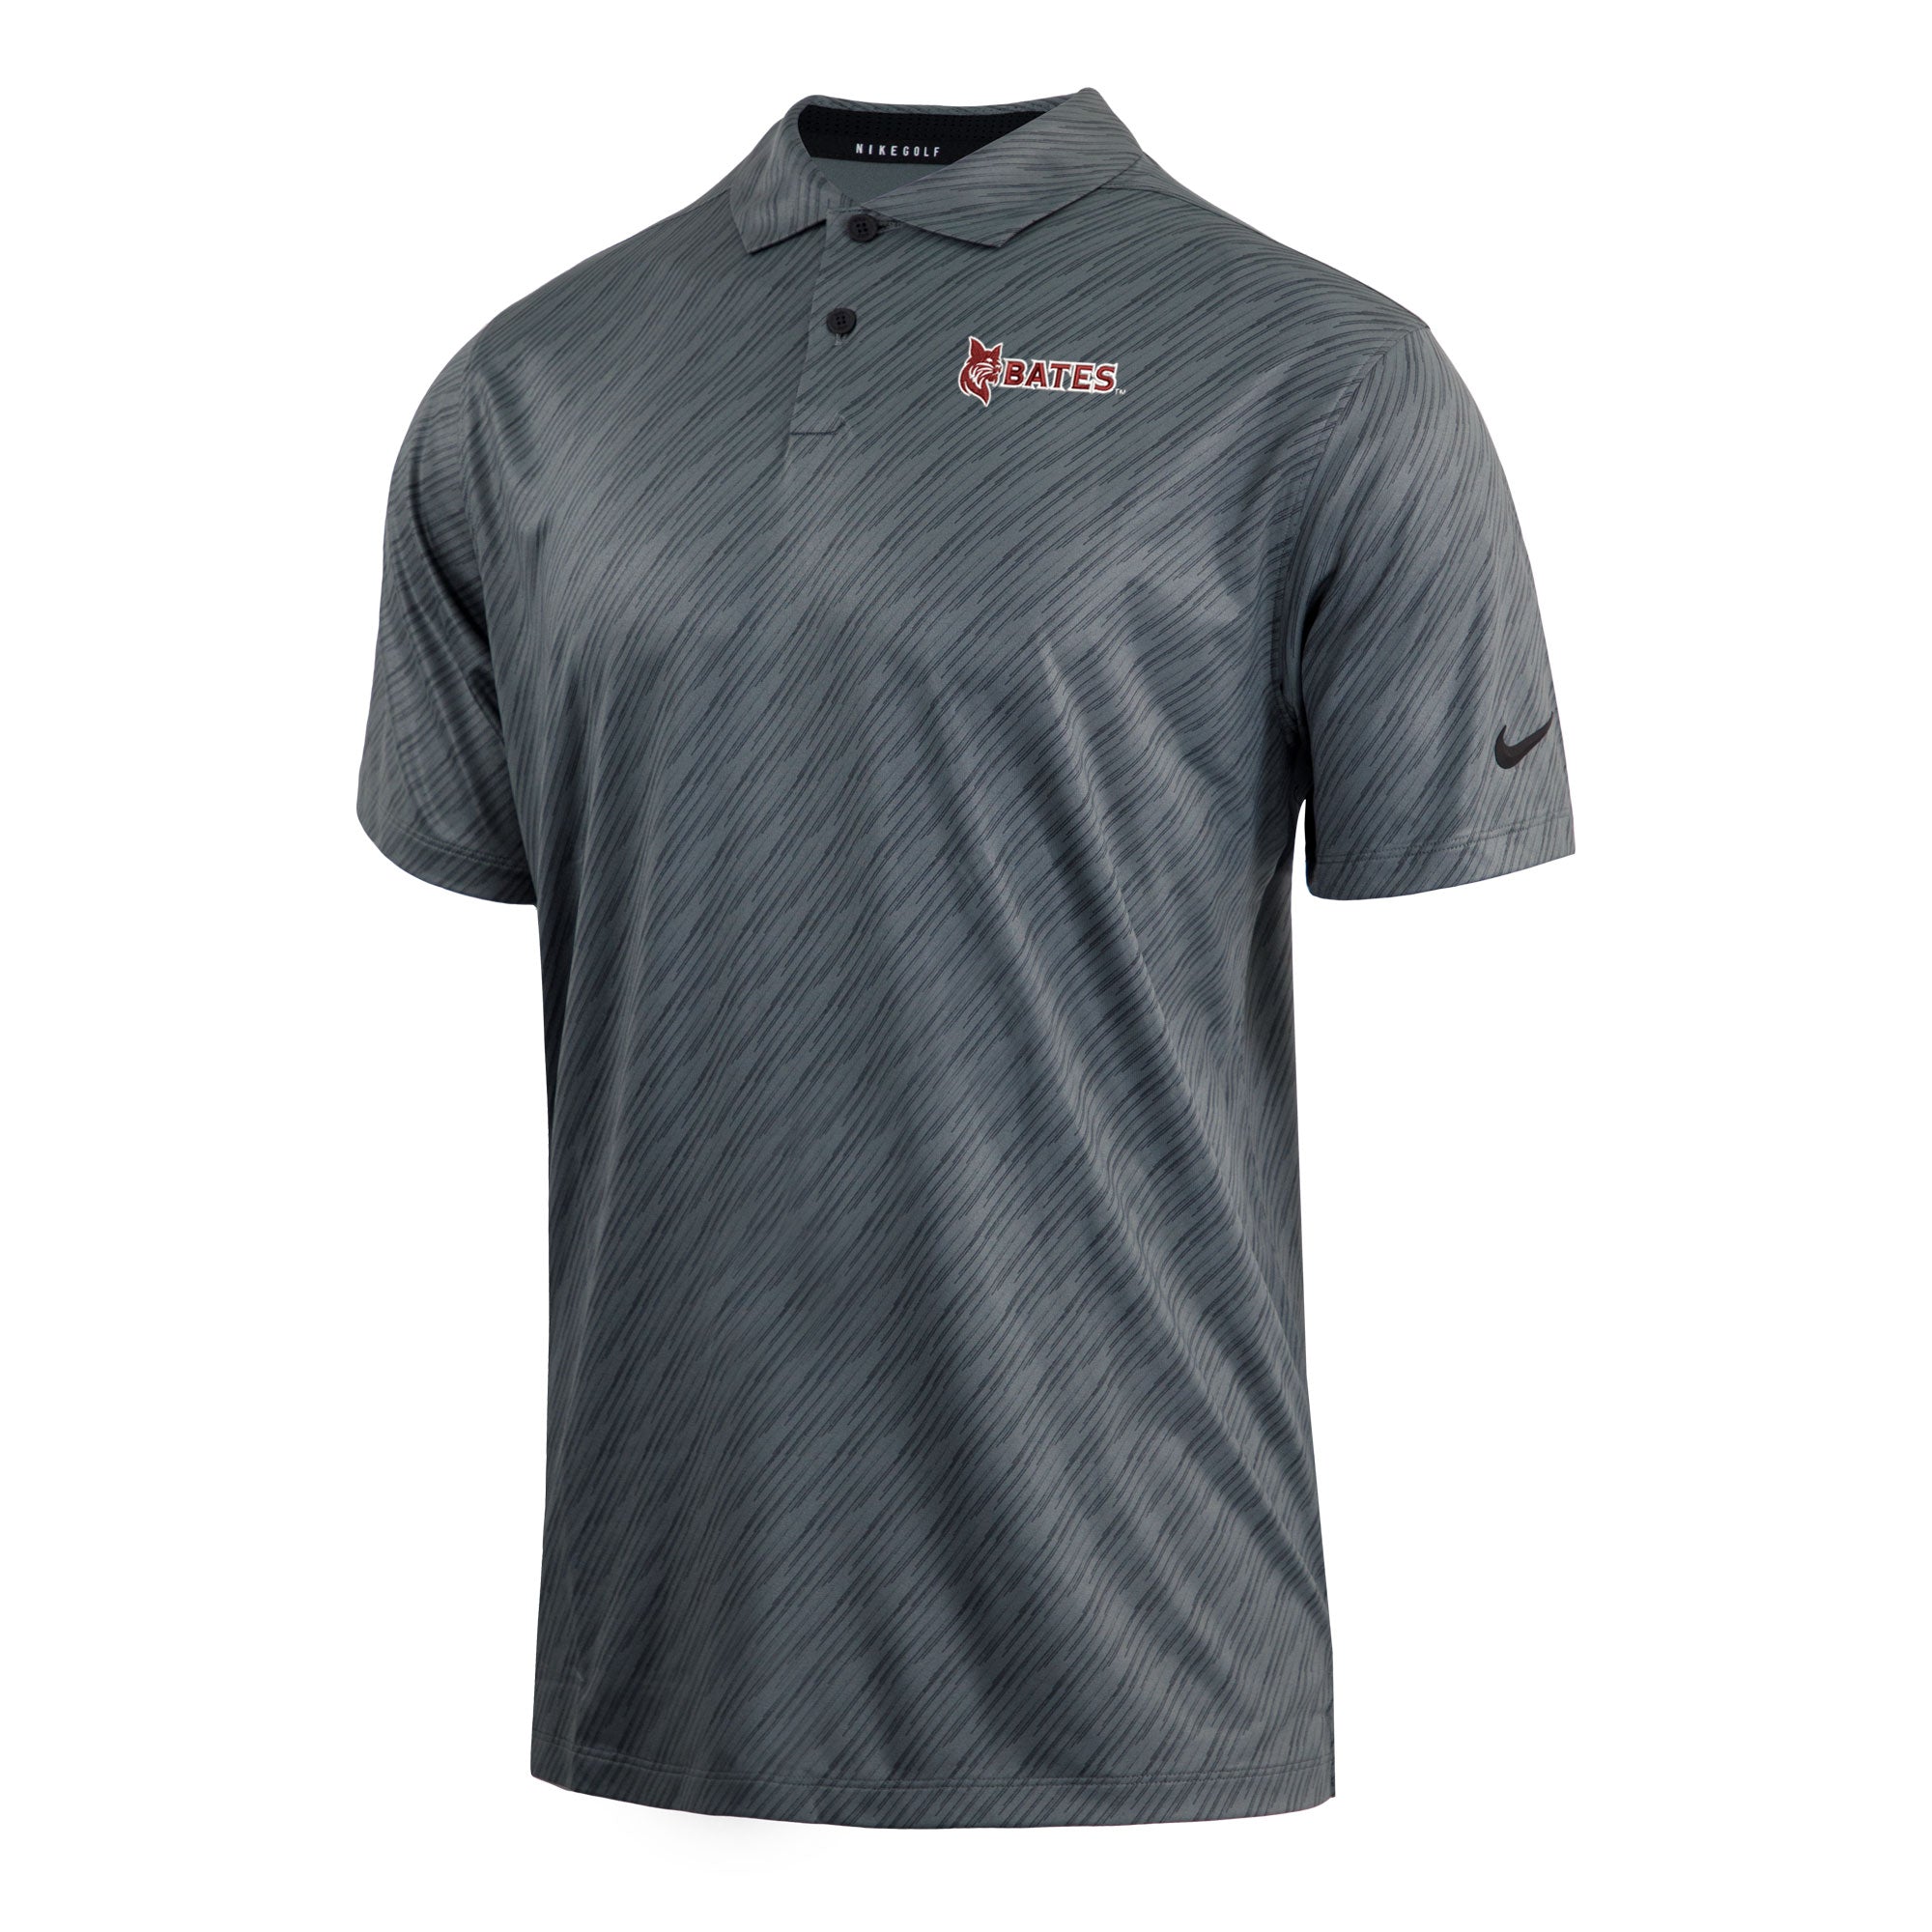 Nike Golf Vapor Men's Shirt, Iron Grey | Bates College Store